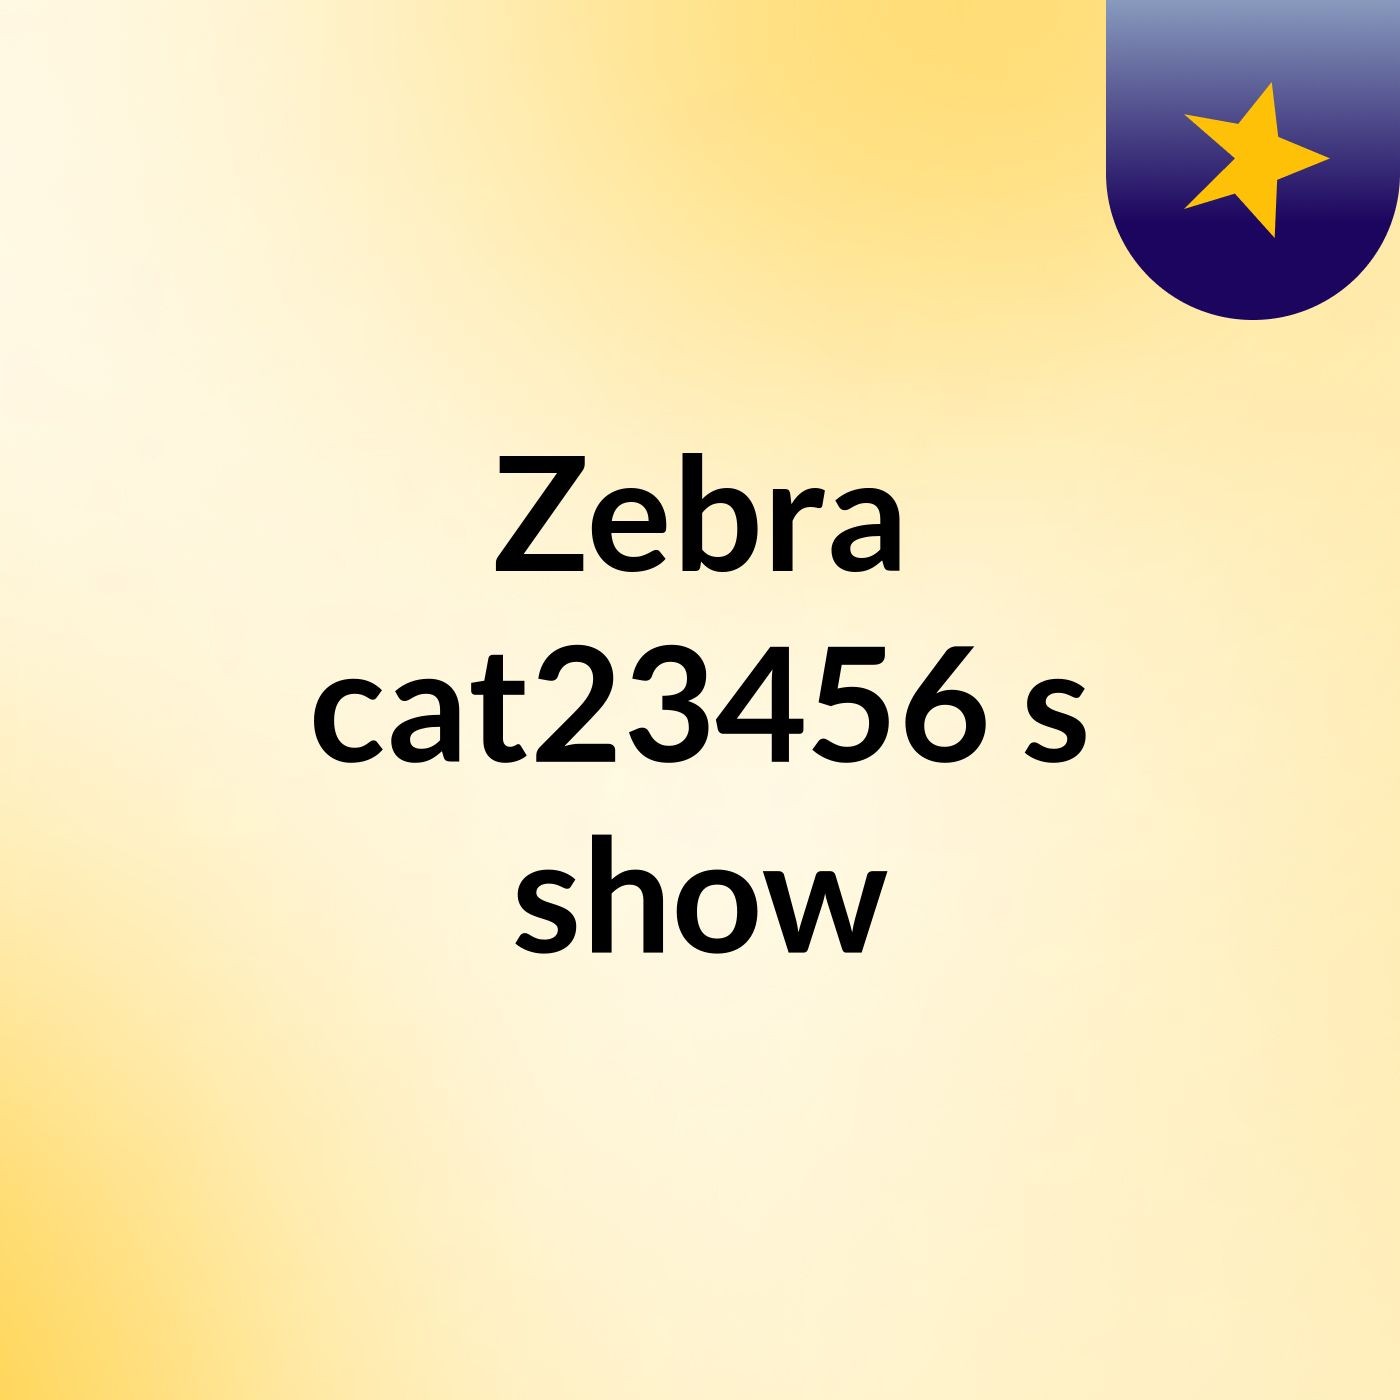 Zebra cat23456's show